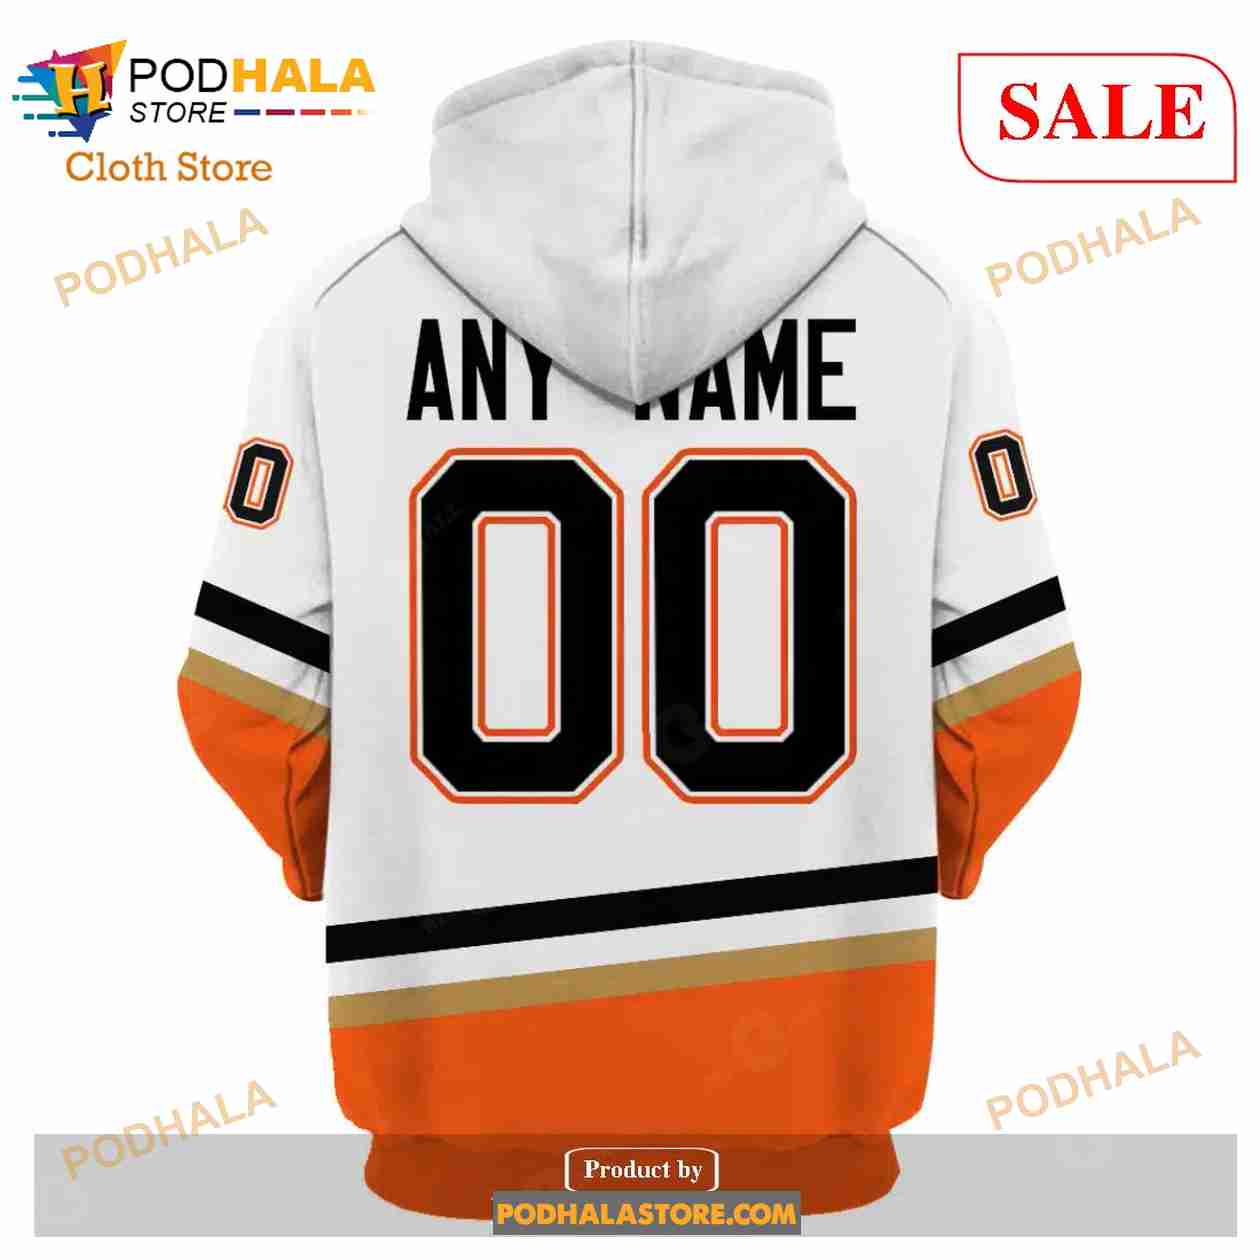 The best selling] NHL Anaheim Ducks Design X The Mighty Ducks Full Printing  Shirt